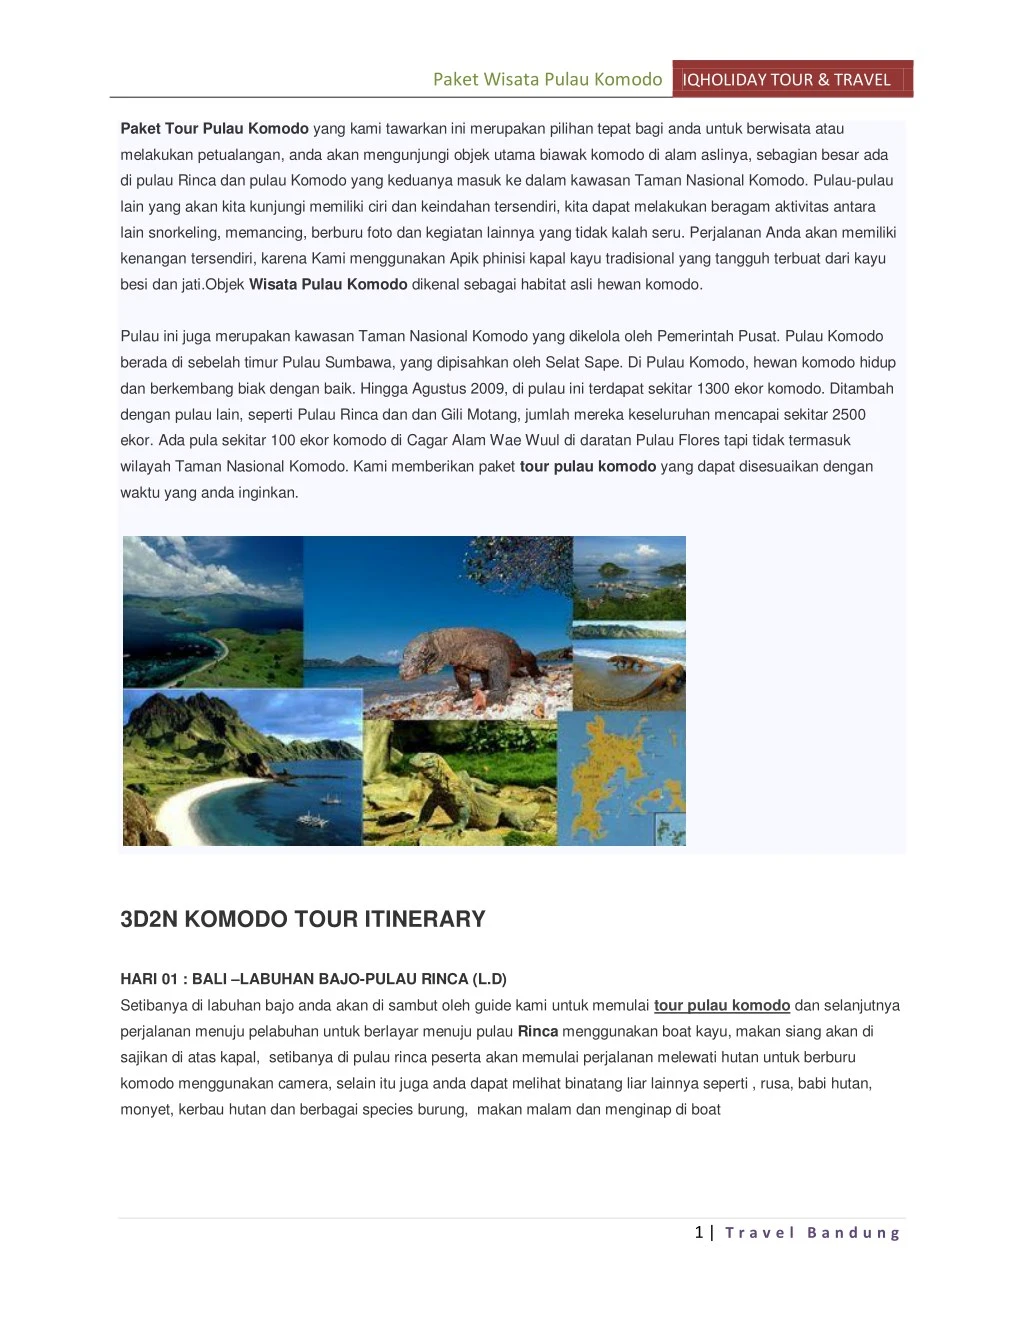 paket wisata pulau komodo iqholiday tour travel